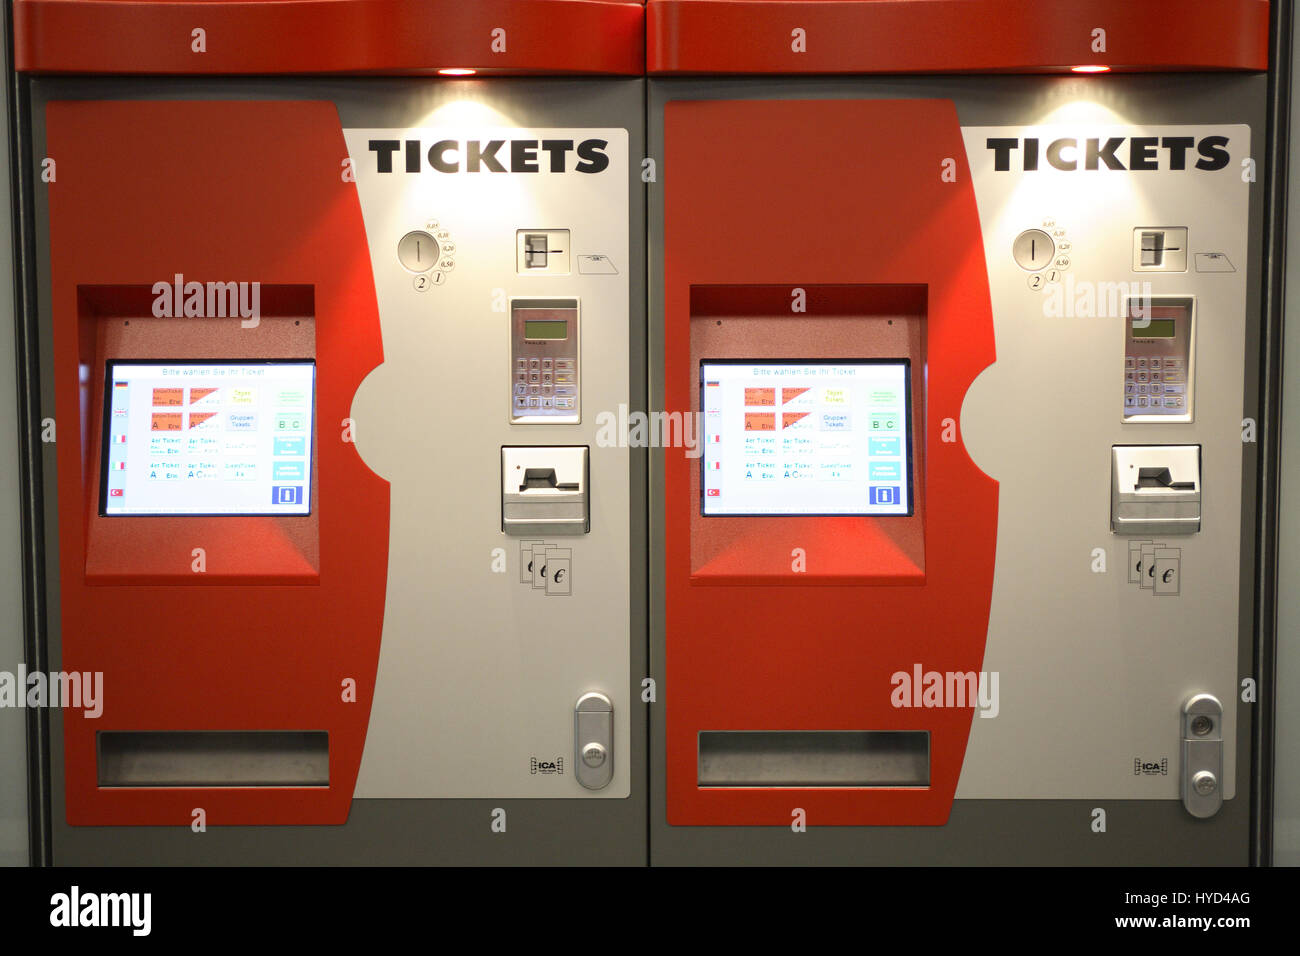 U Bahn Ticket Stockfotos & U Bahn Ticket Bilder Alamy